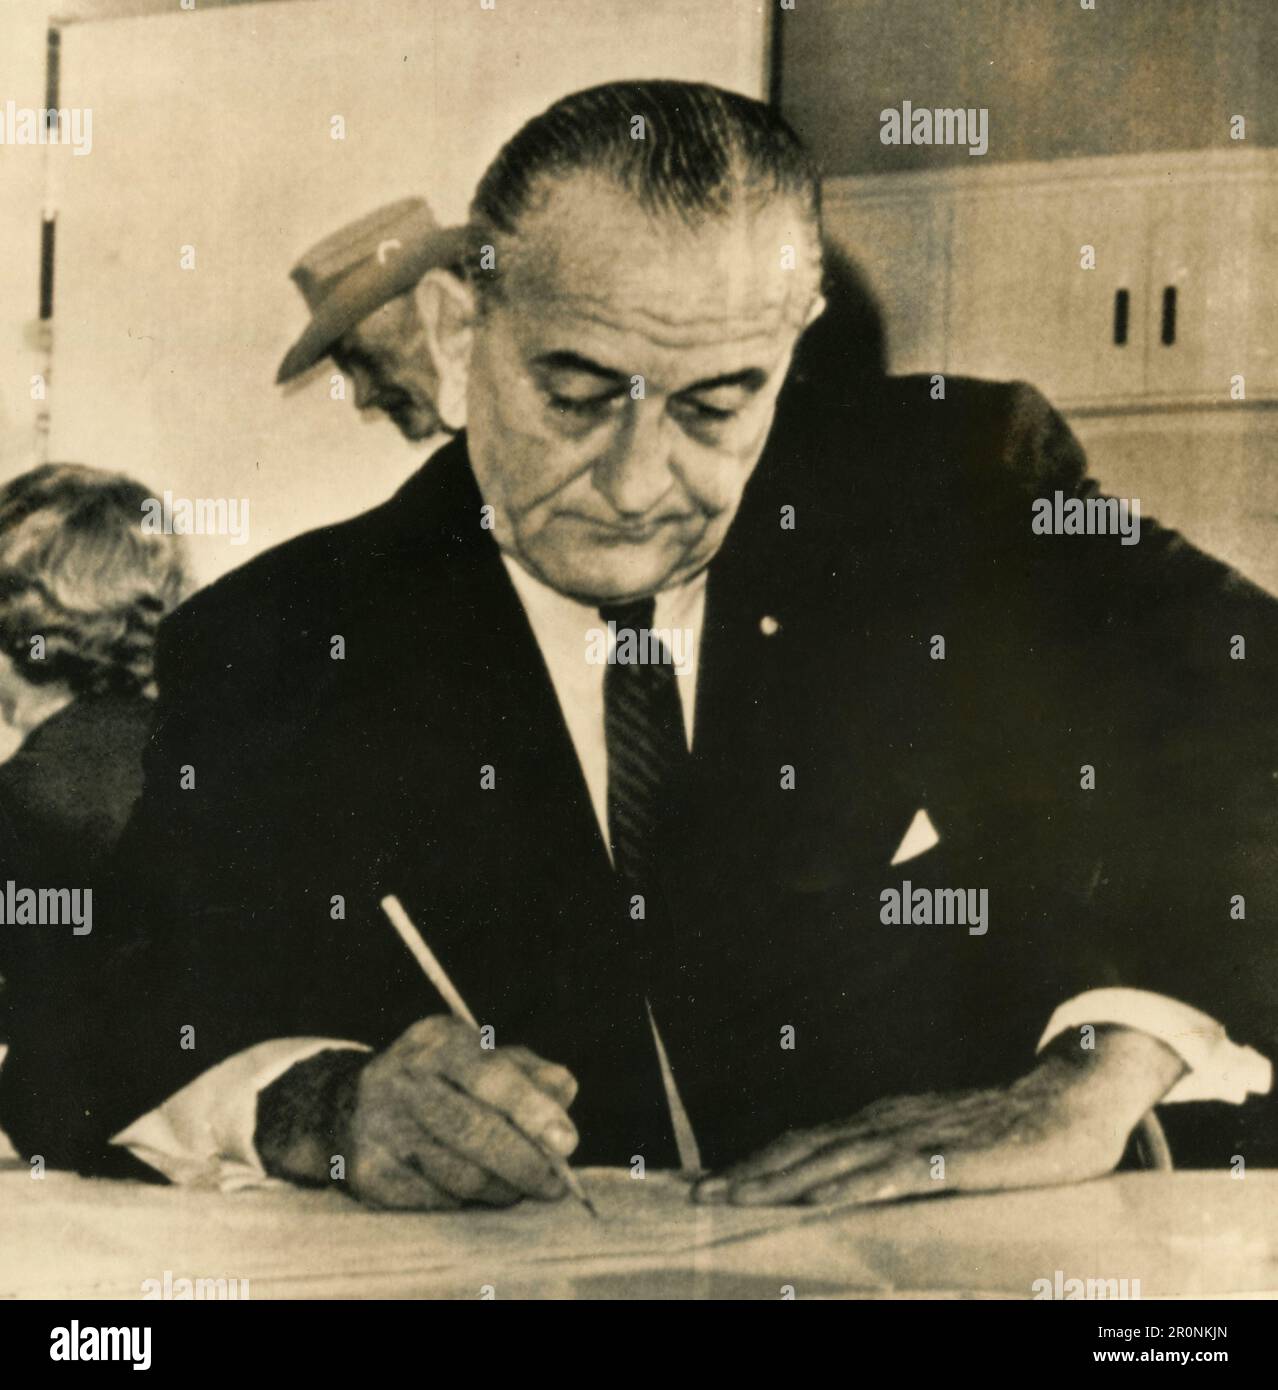 US President Lyndon Johnson casting his vote in the general election, Washington, USA 1965 Stock Photo